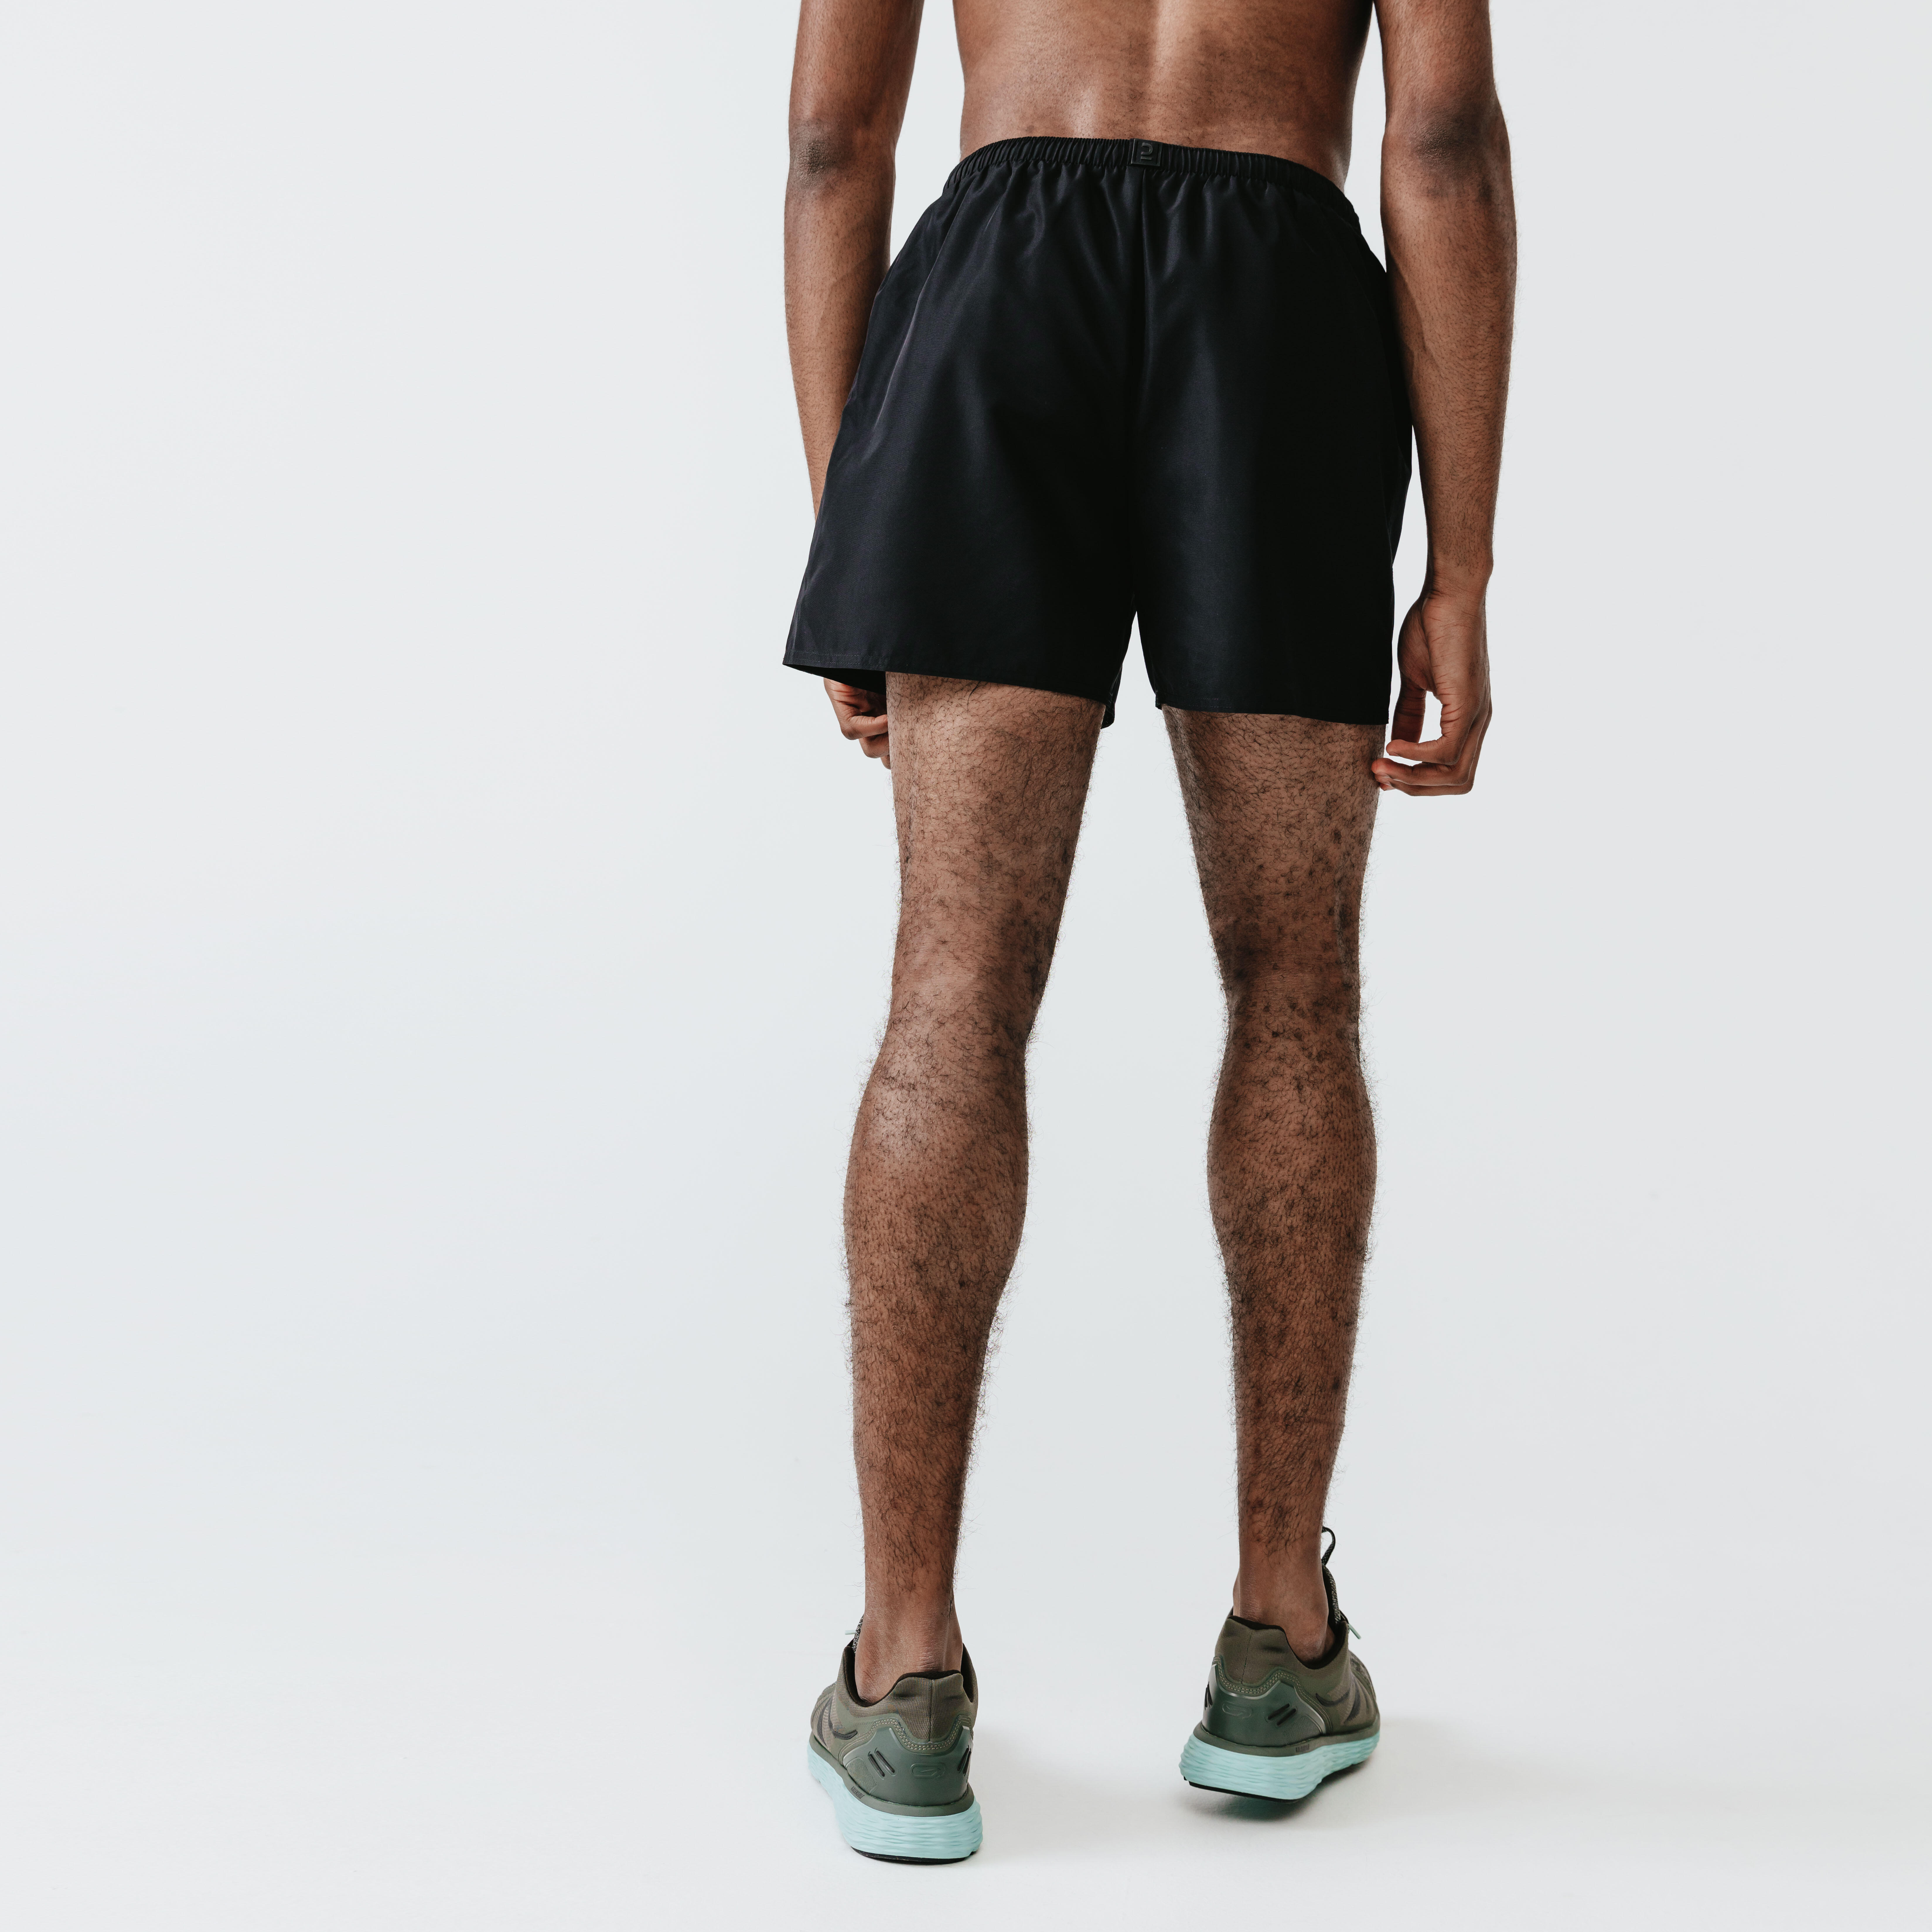 dry running shorts